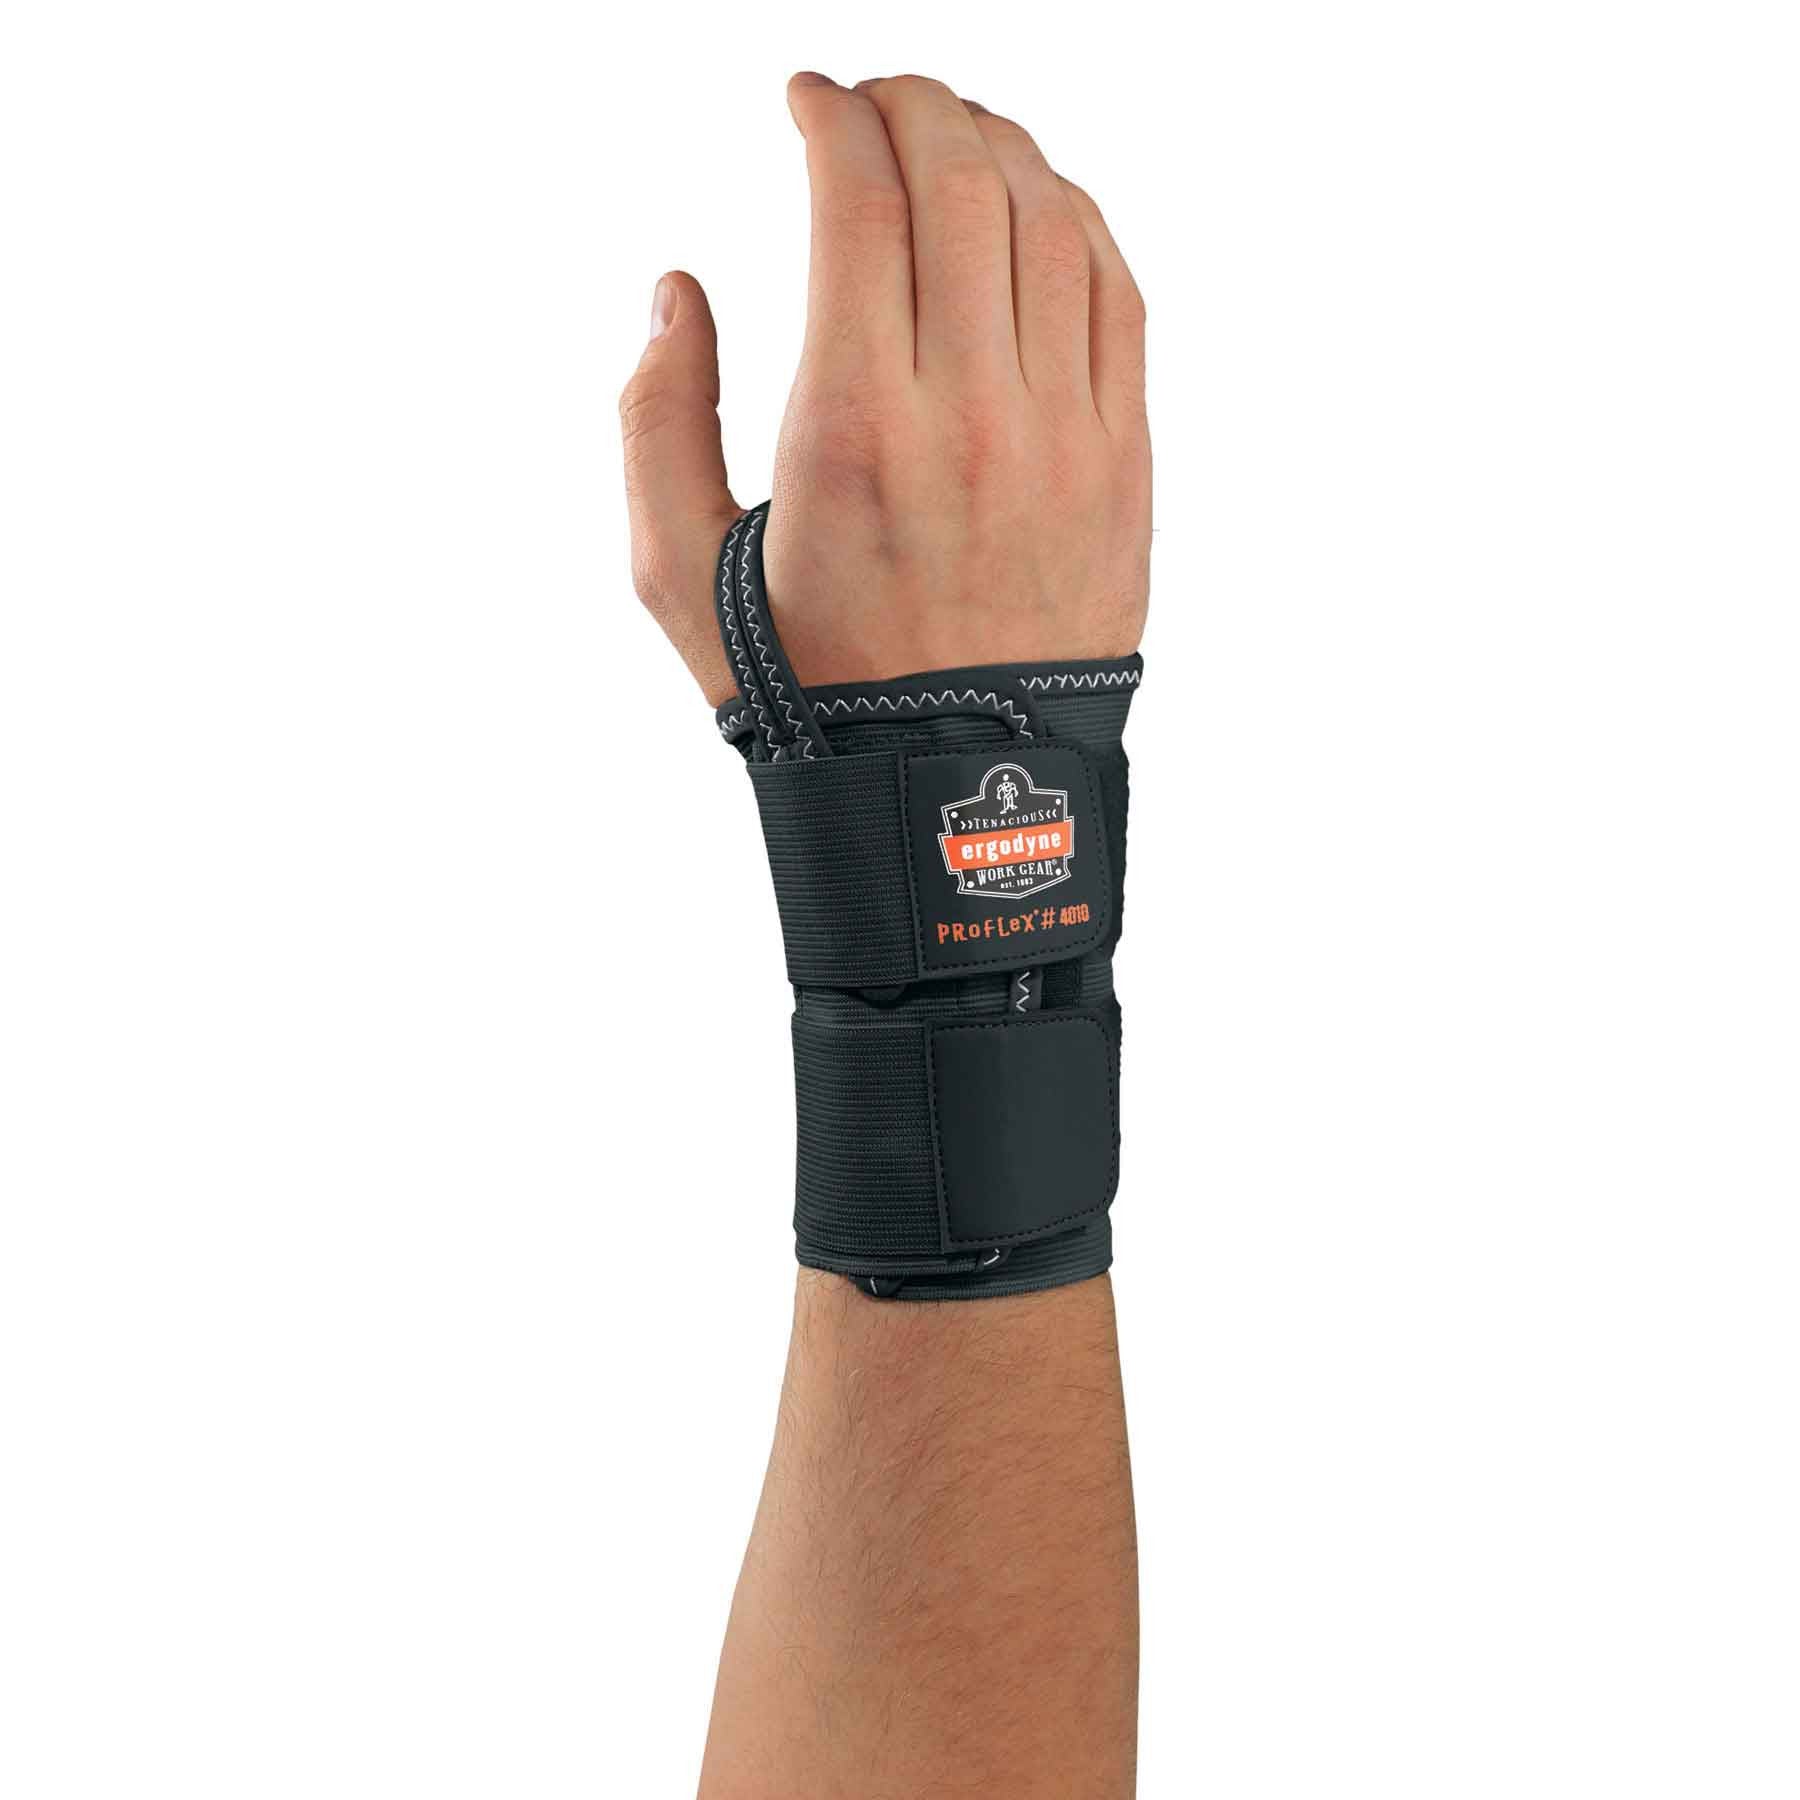 ProFlex 4010 Double Strap Wrist Support-eSafety Supplies, Inc